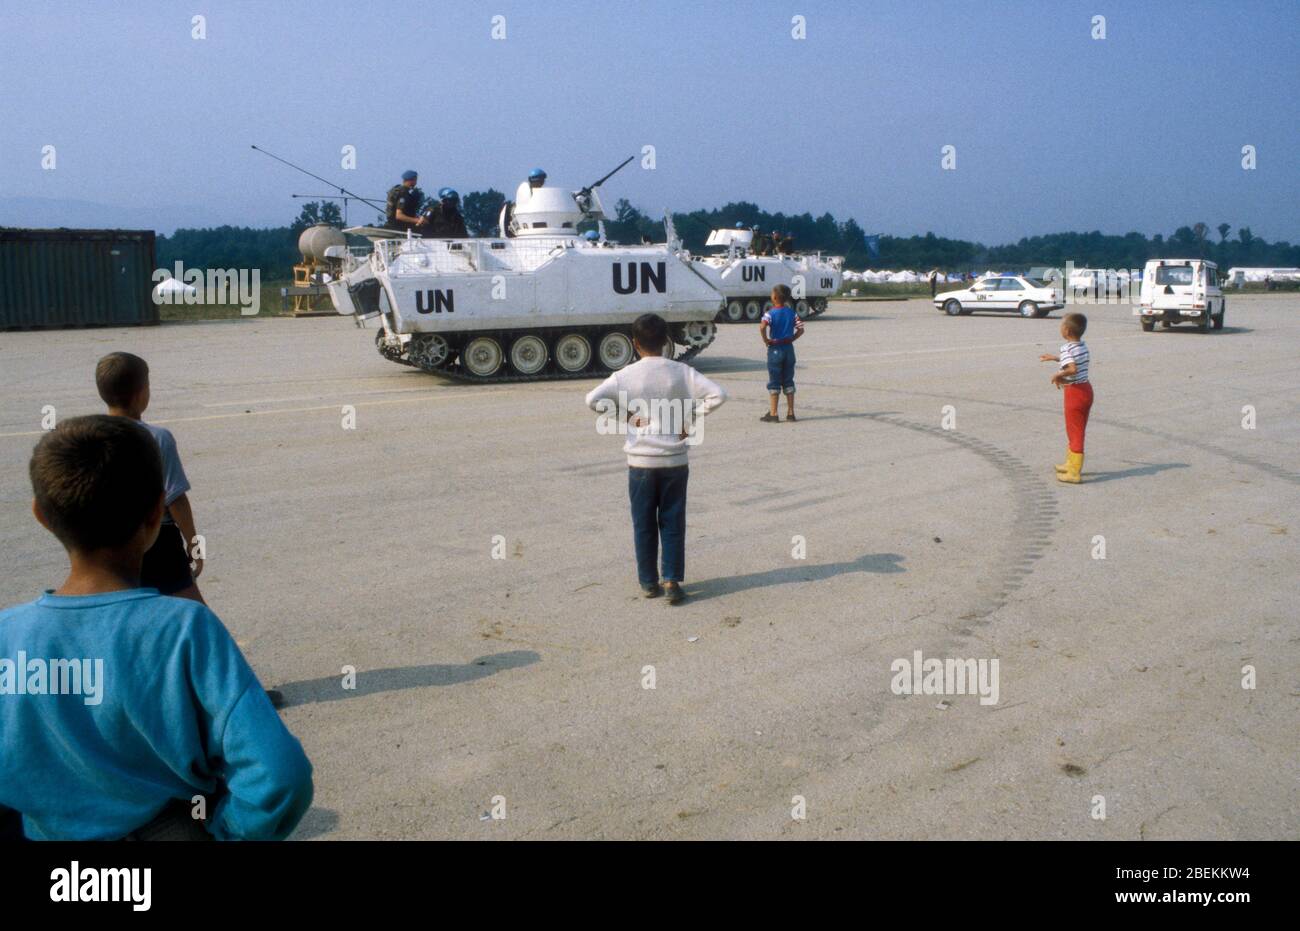 1995 Tuzla, Bosnia - UN tank protecting the UN Tuzla airfield temporary refugee camp for Bosnian Muslims fleeing the Srebrenica Massacre during the Bosnian war Stock Photo